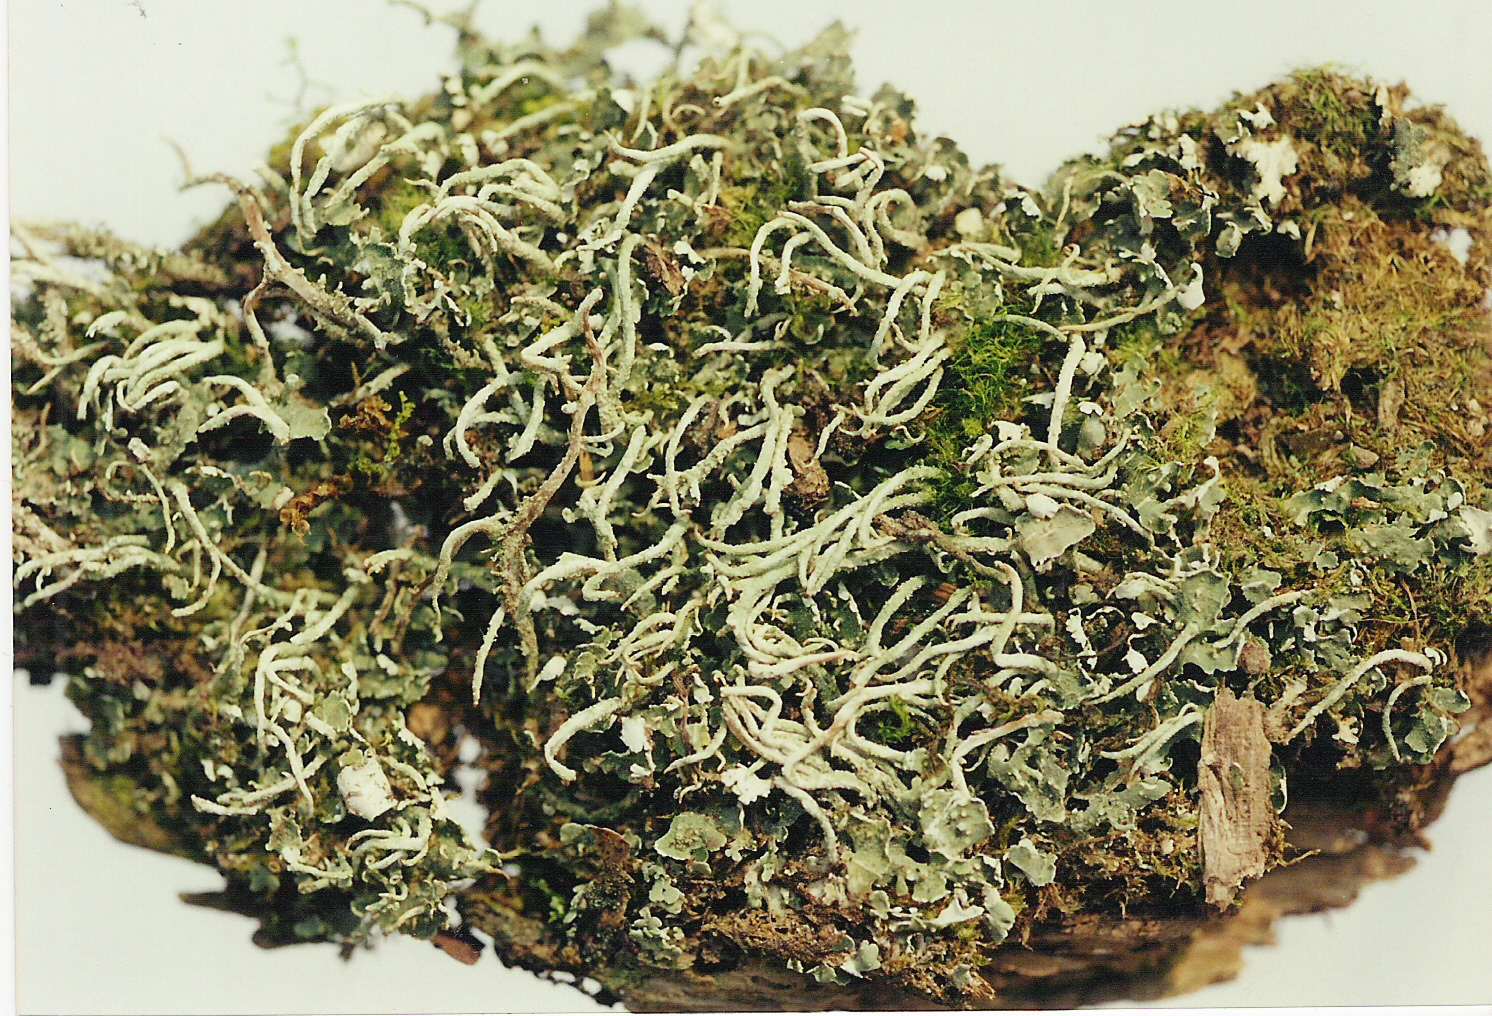 Dimorphic Lichens